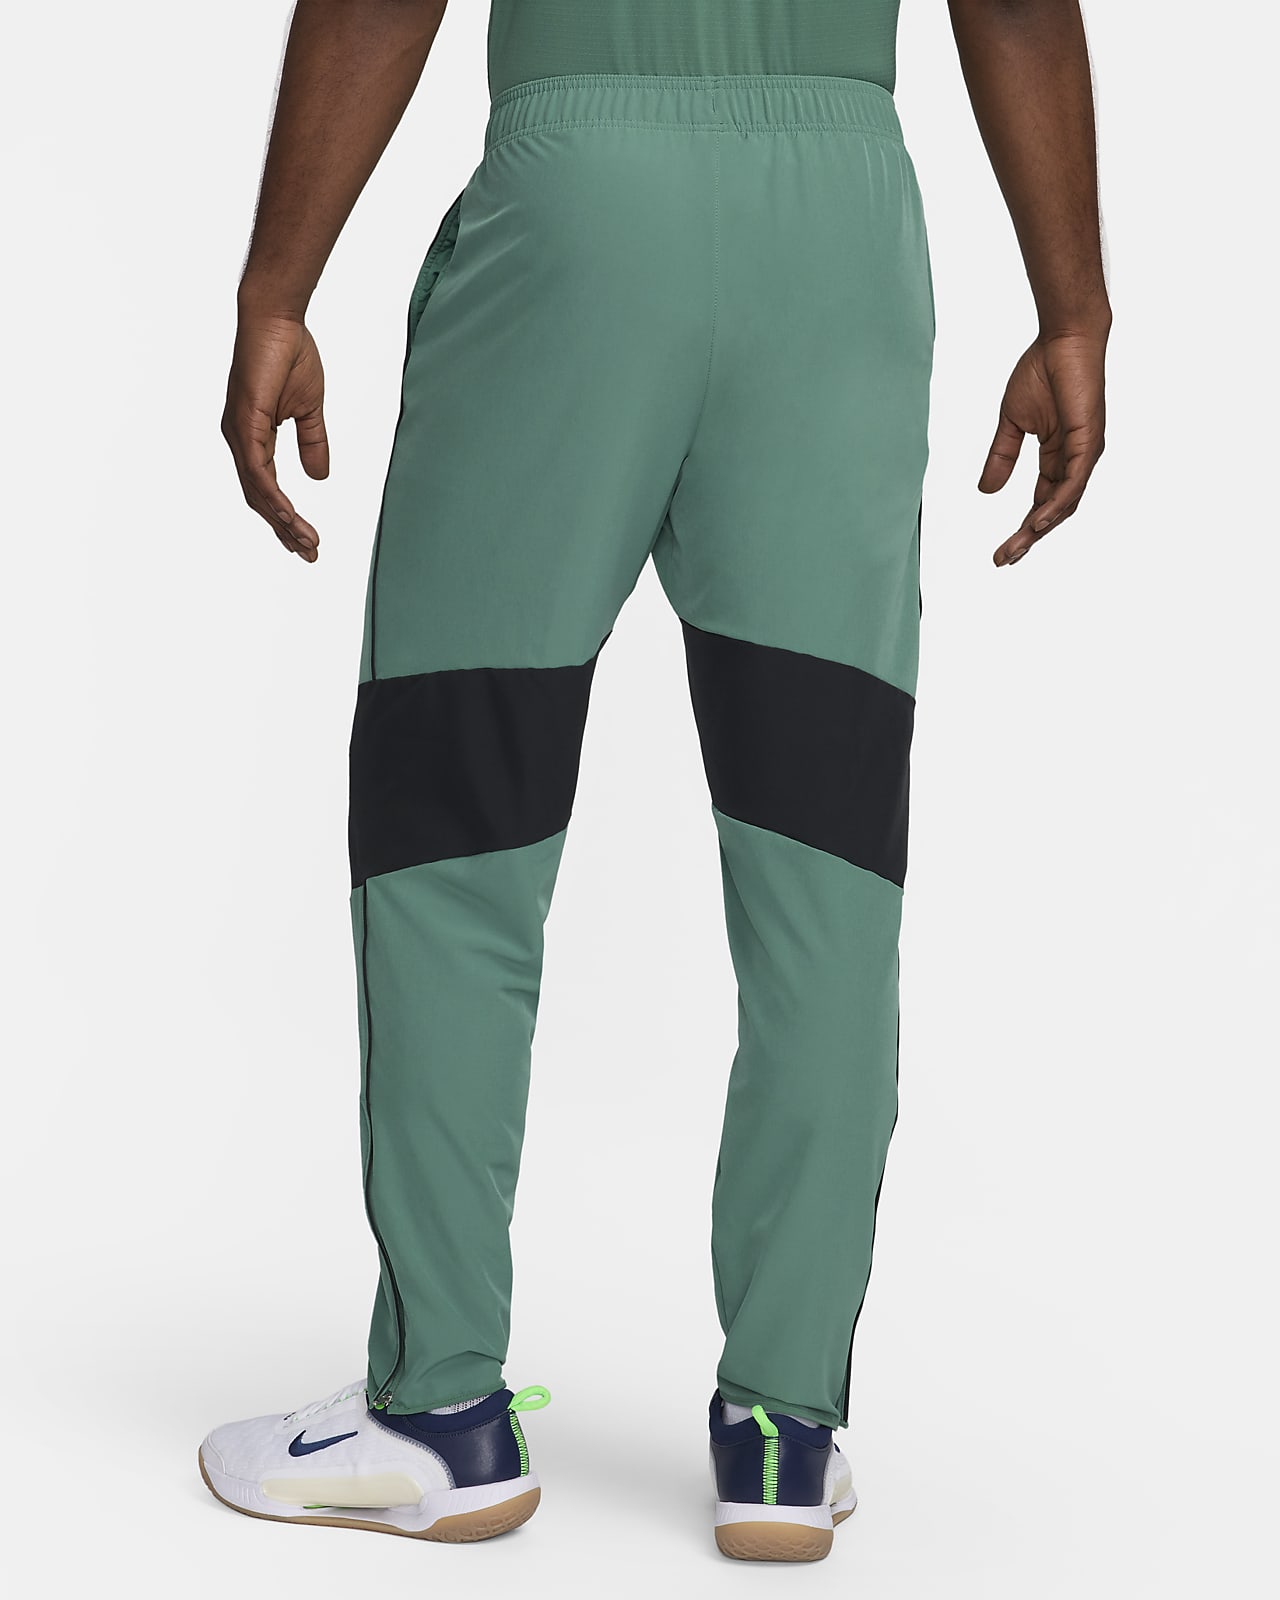 Nike Tennis Pants.